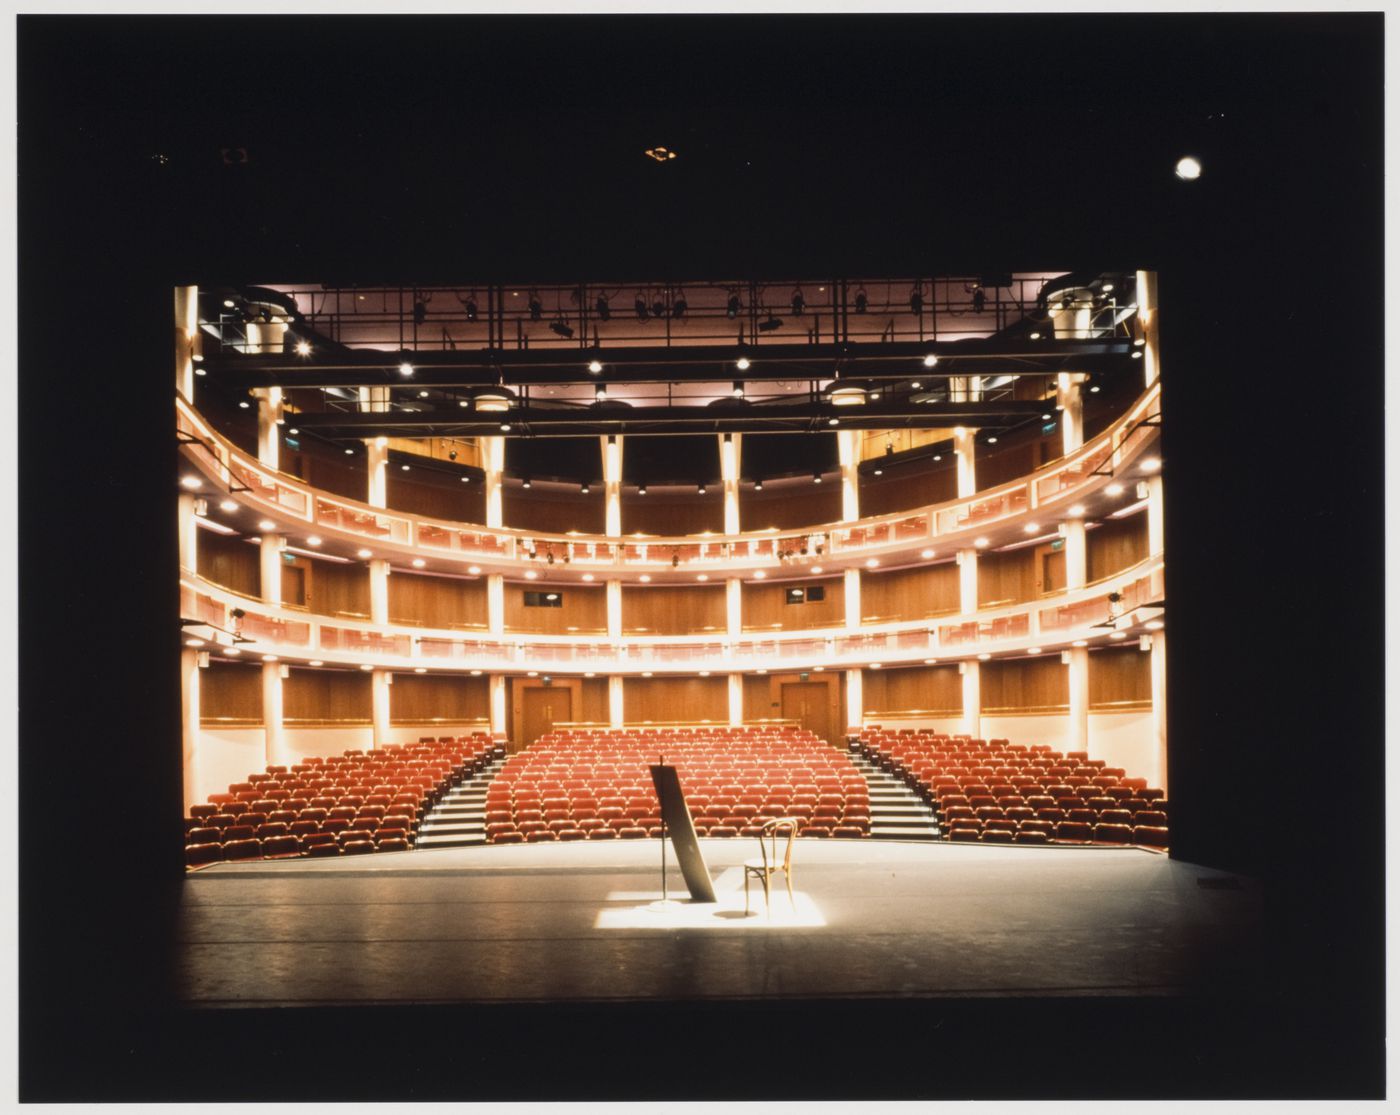 Center for Theatre Arts, Cornell University, Ithaca, New York